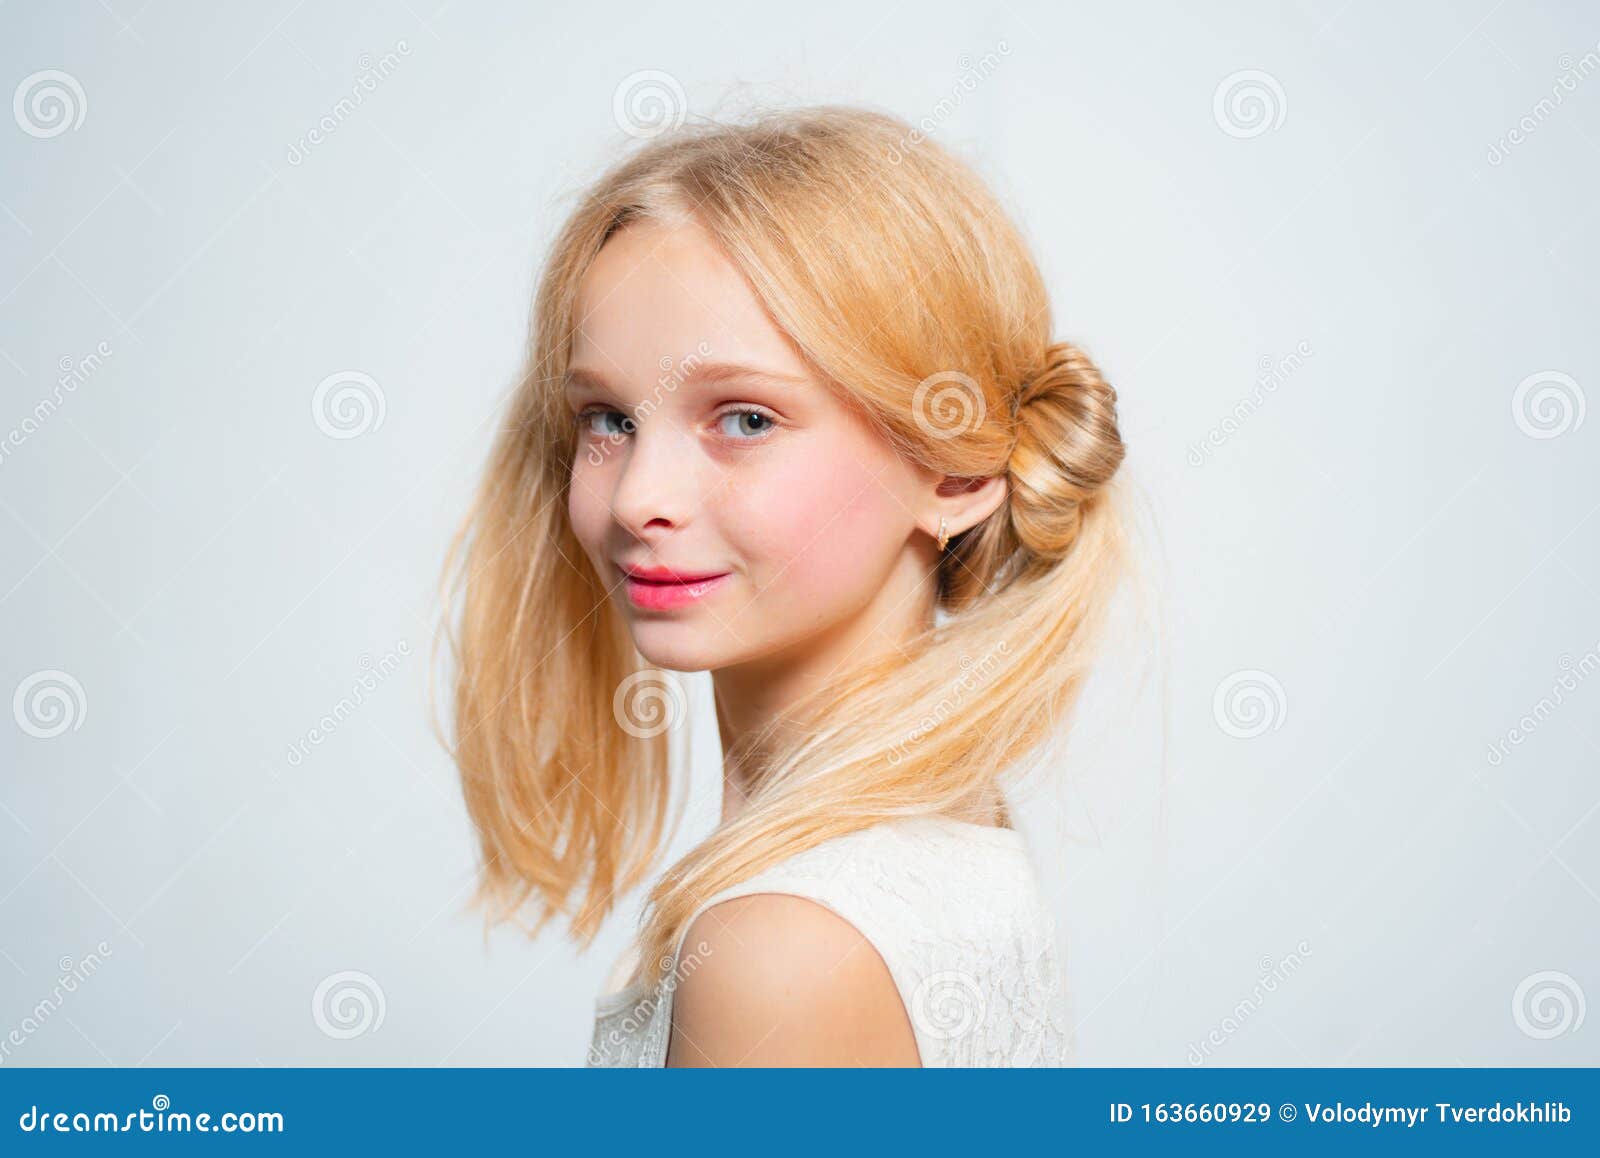 7. Blonde Teen Girl with Headband - wide 9